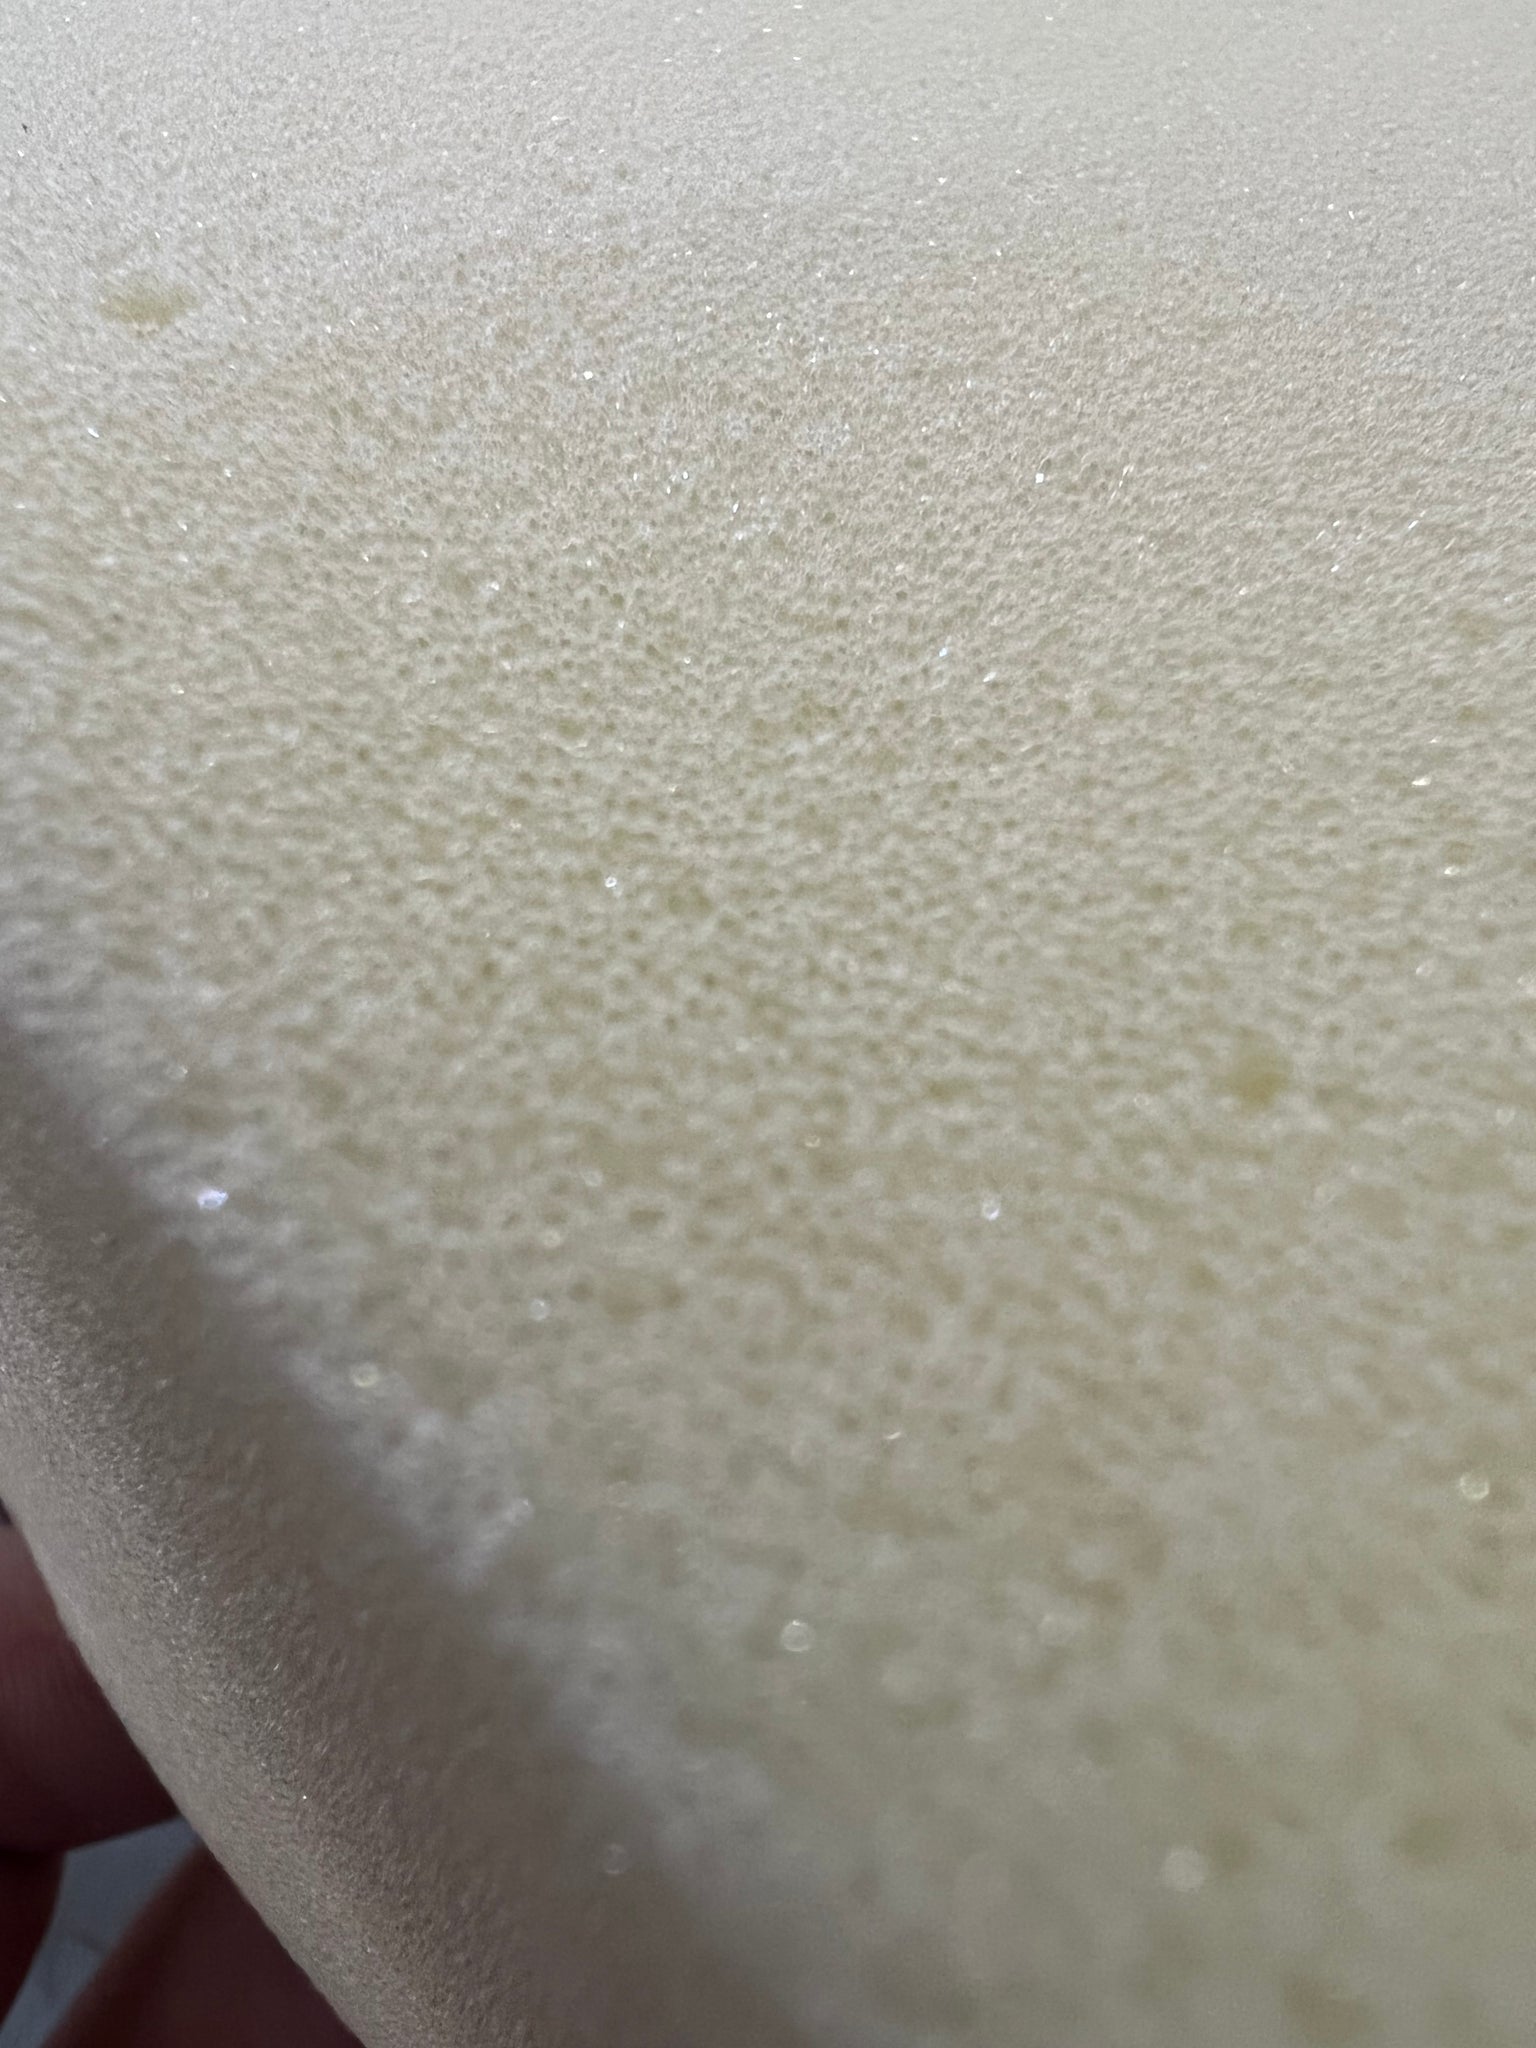 1844 High Density Foam Firm – BayTrim Upholstery Supply